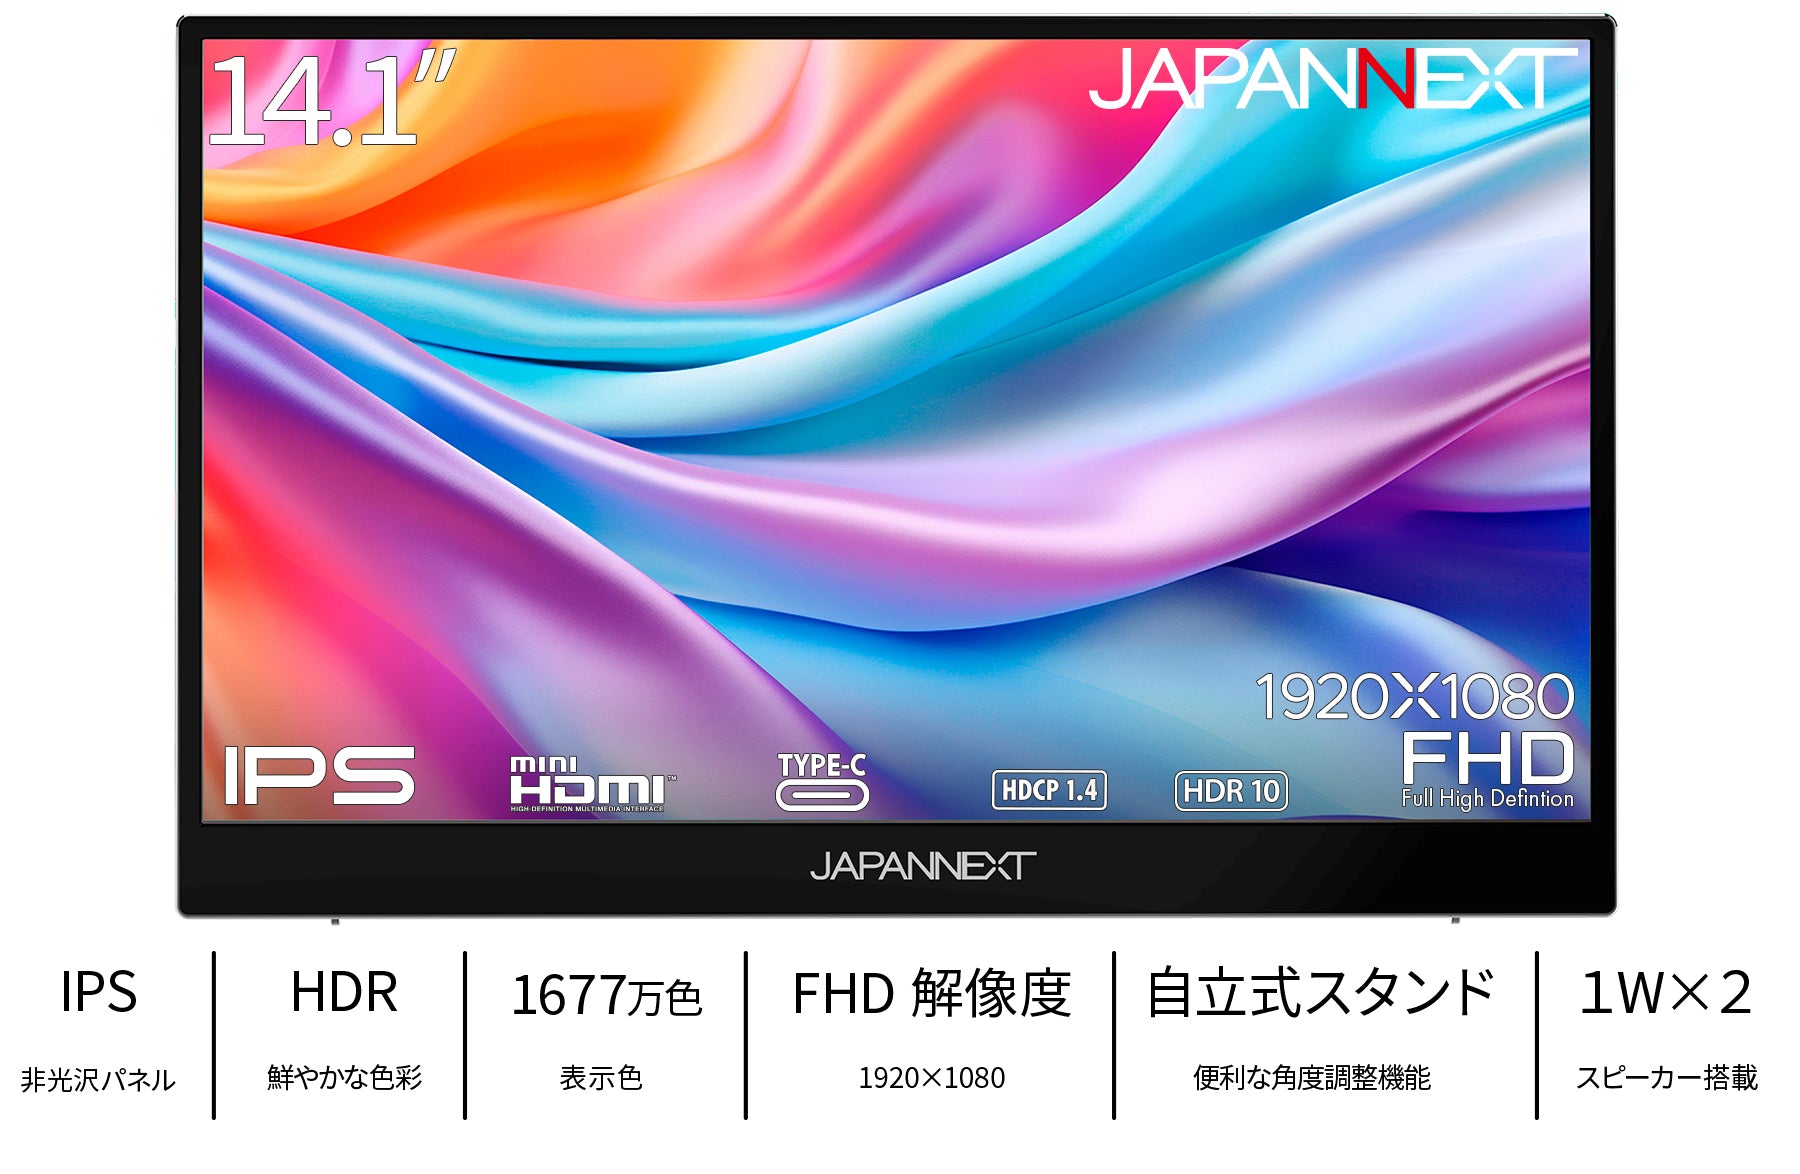 JAPANNEXT 14.1インチ IPSパネル搭載 フルHD(1920x1080)解像度 